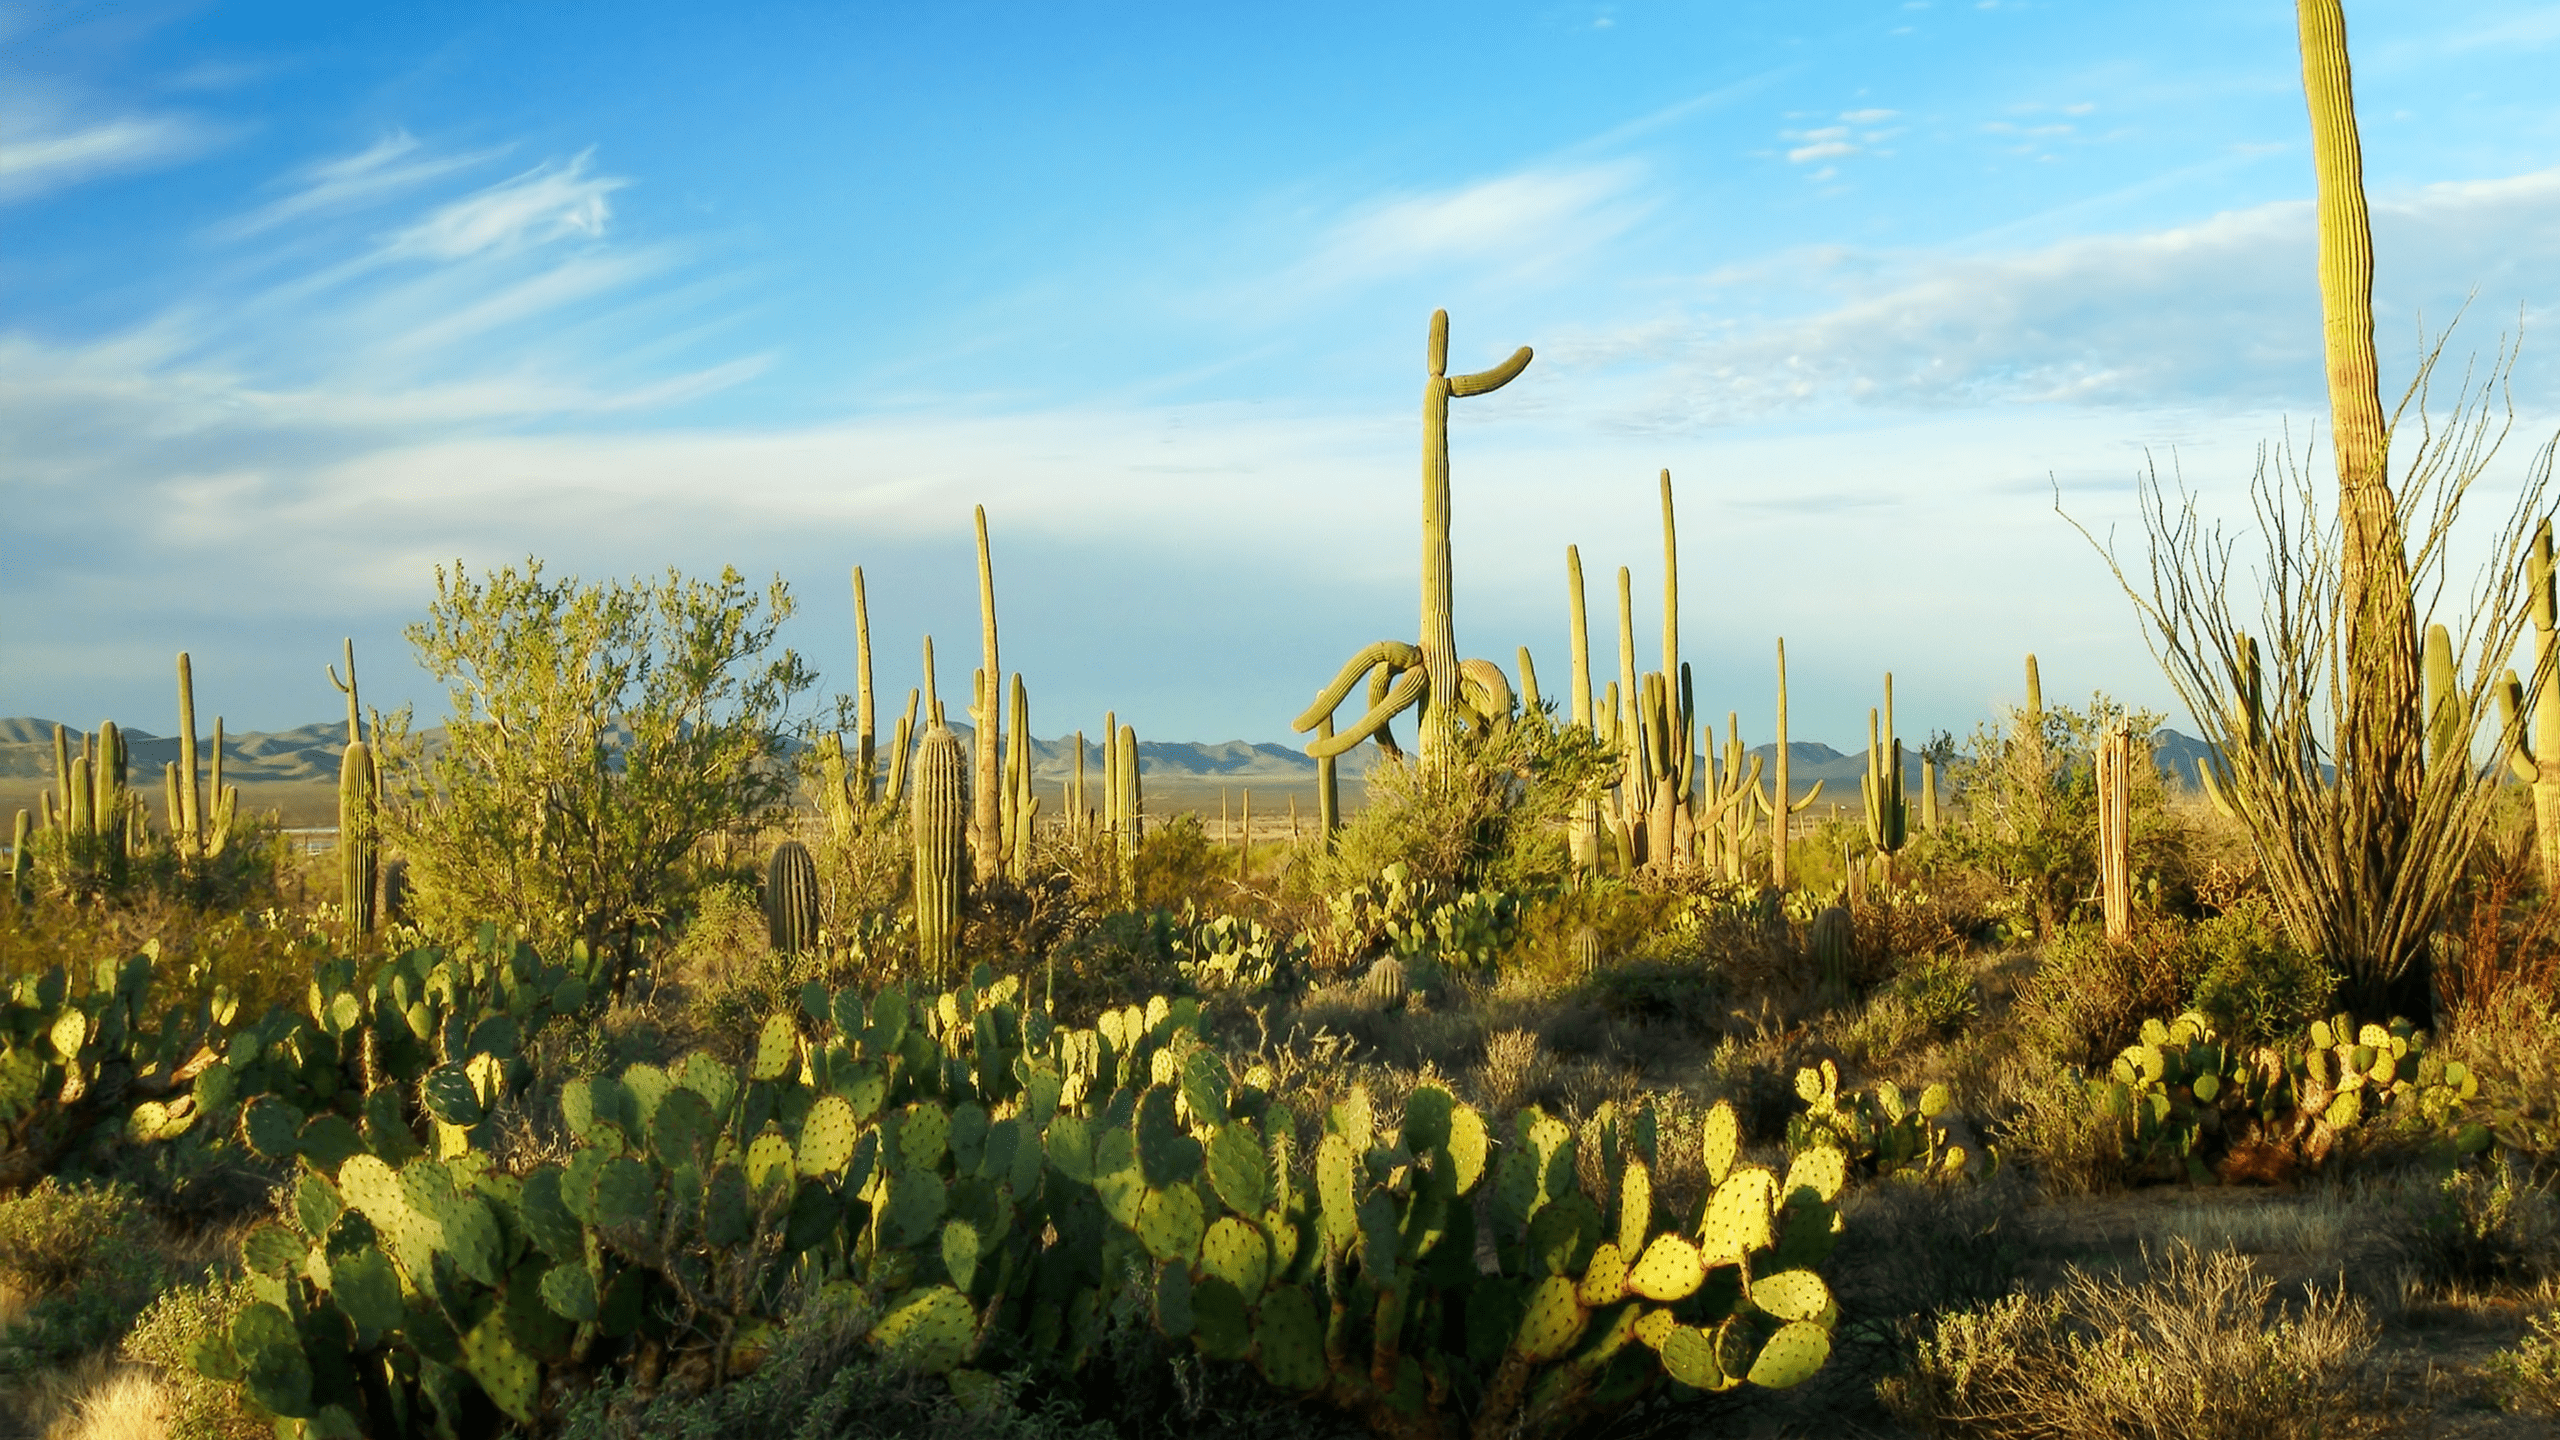 saguaro cactus with yellow blooms